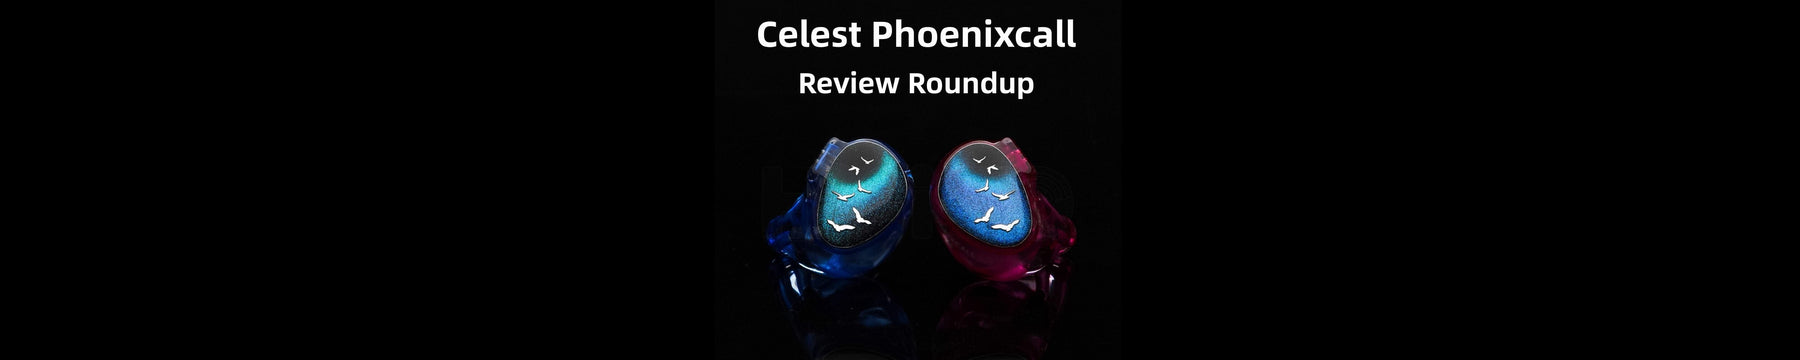 Celest Phoenixcall 1DD+2BA+2 Micro Planar Driver Multi-Driver Hybrid IEMs Review Roundup